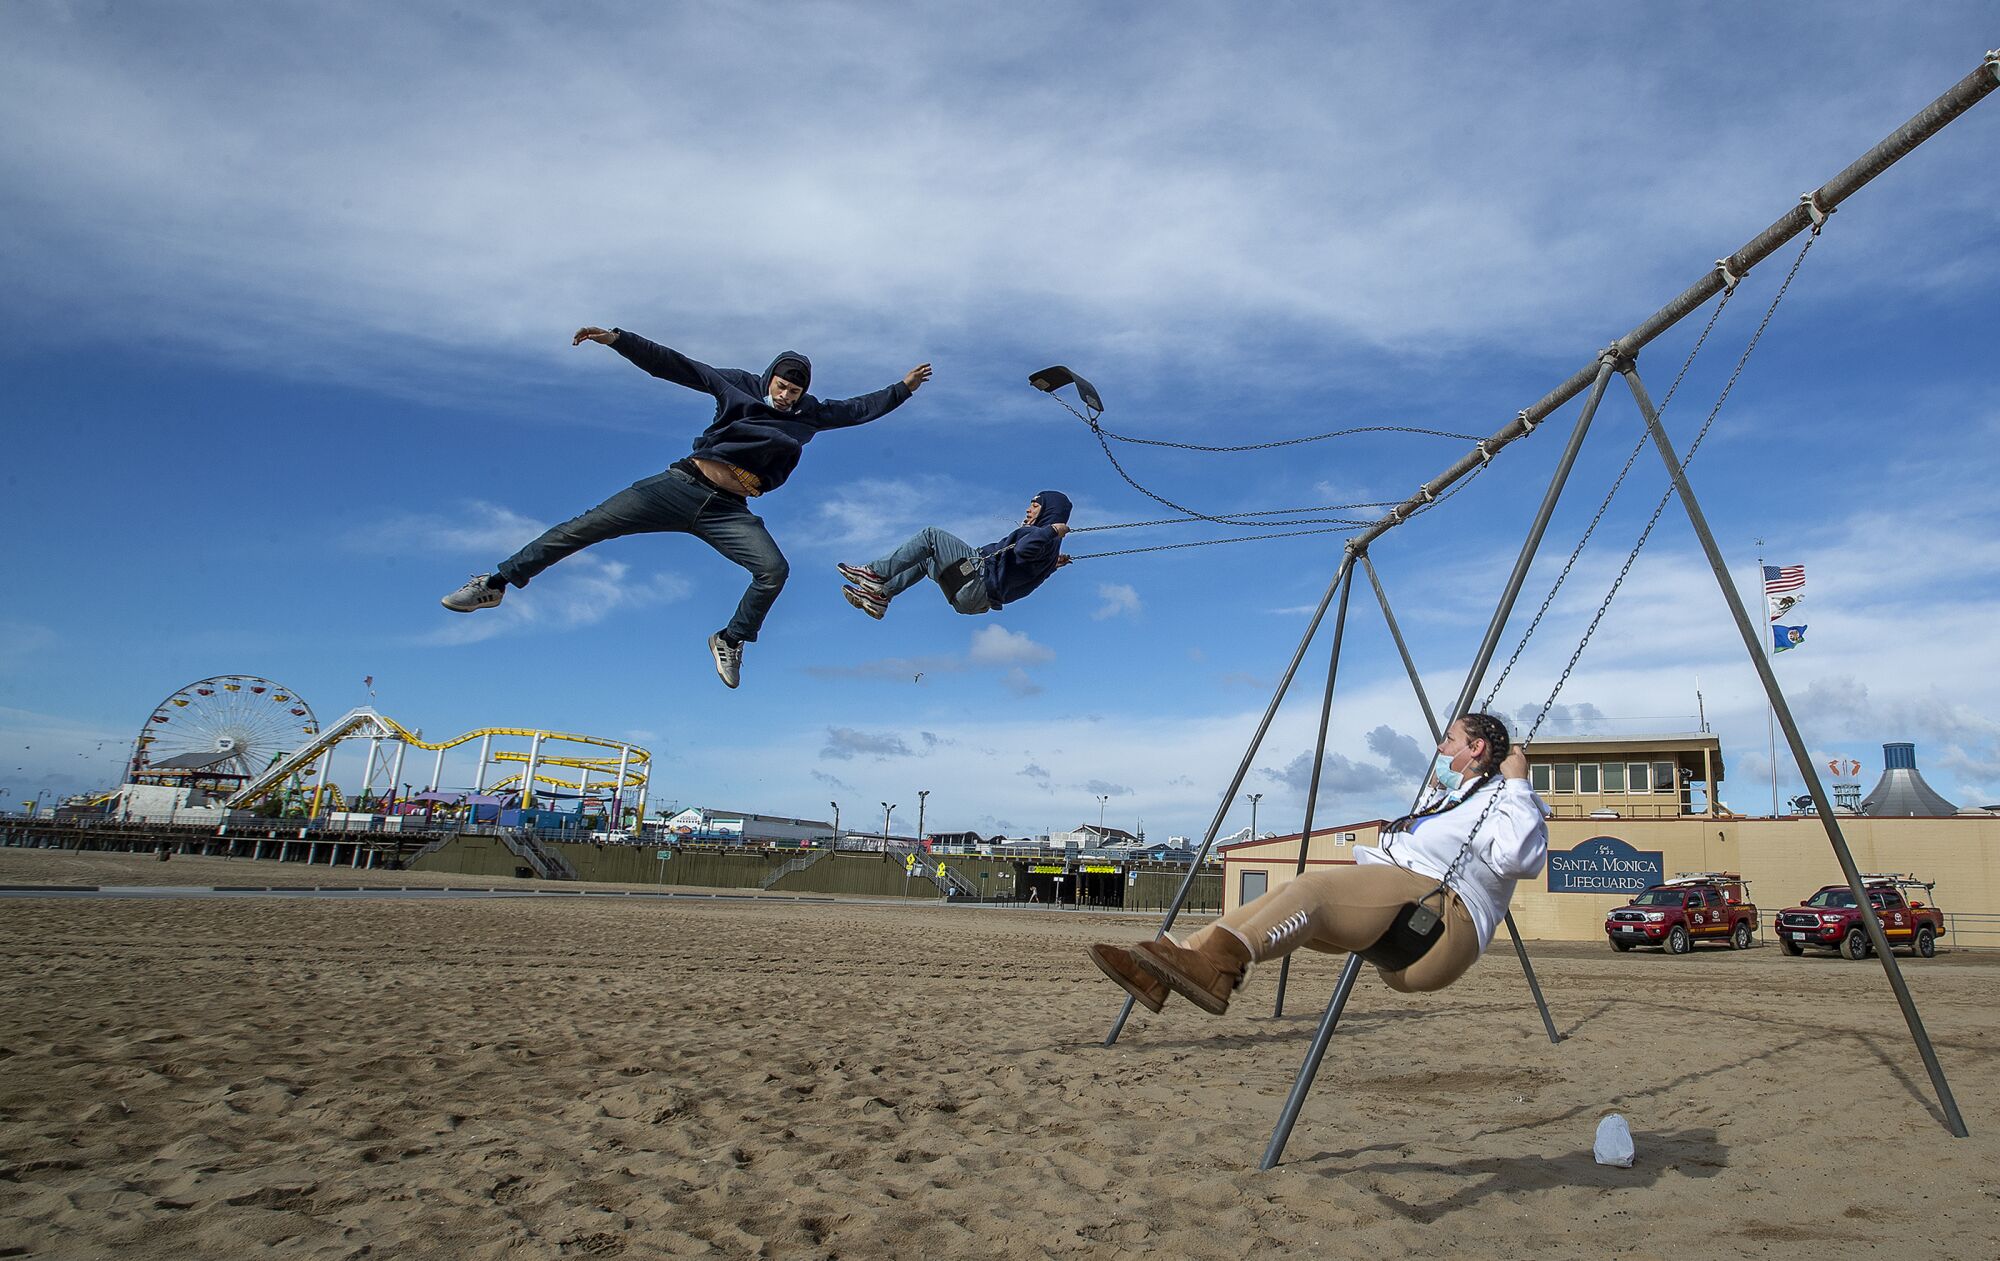 Three people use the swings on a beach